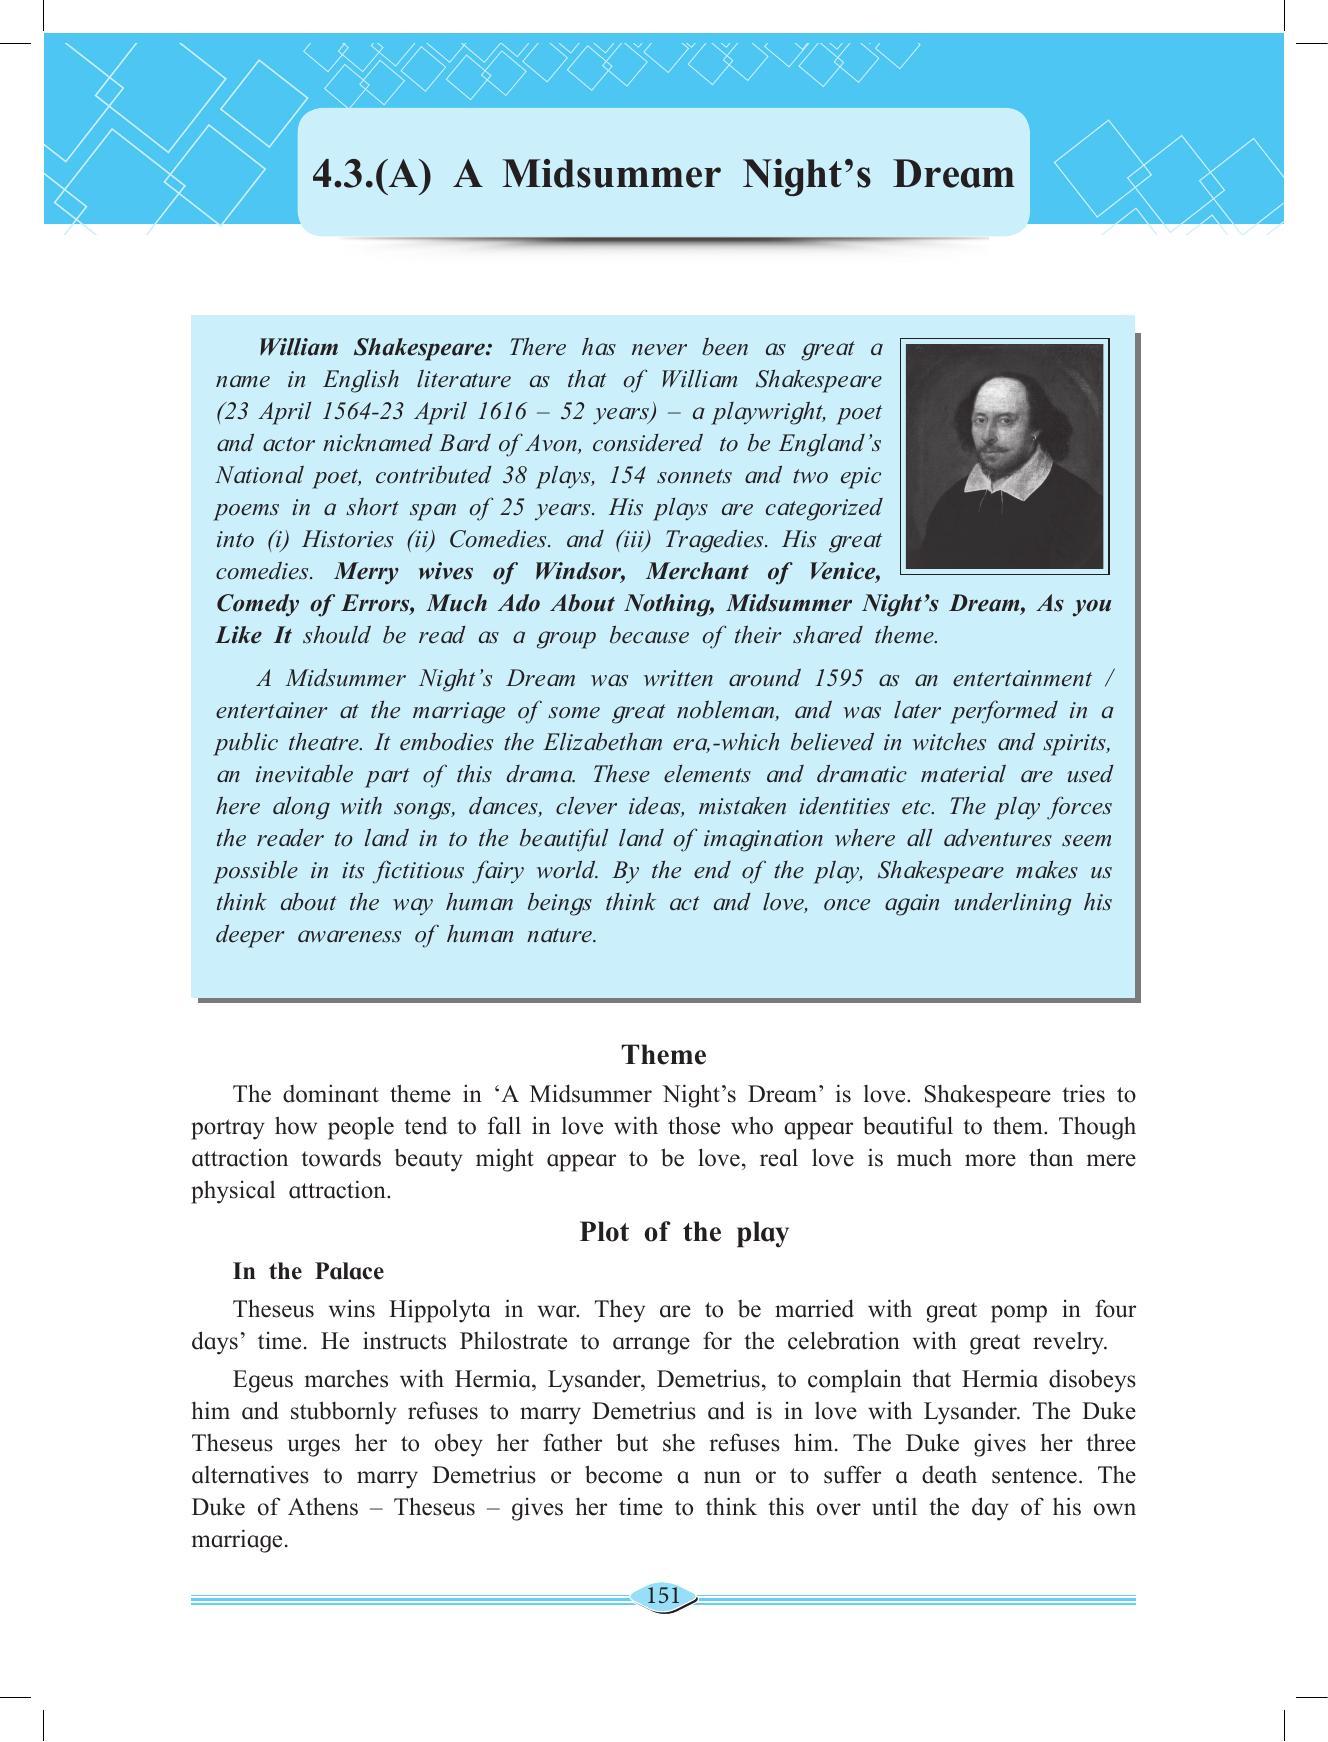 Maharashtra Board Class 11 English Textbook - Page 165